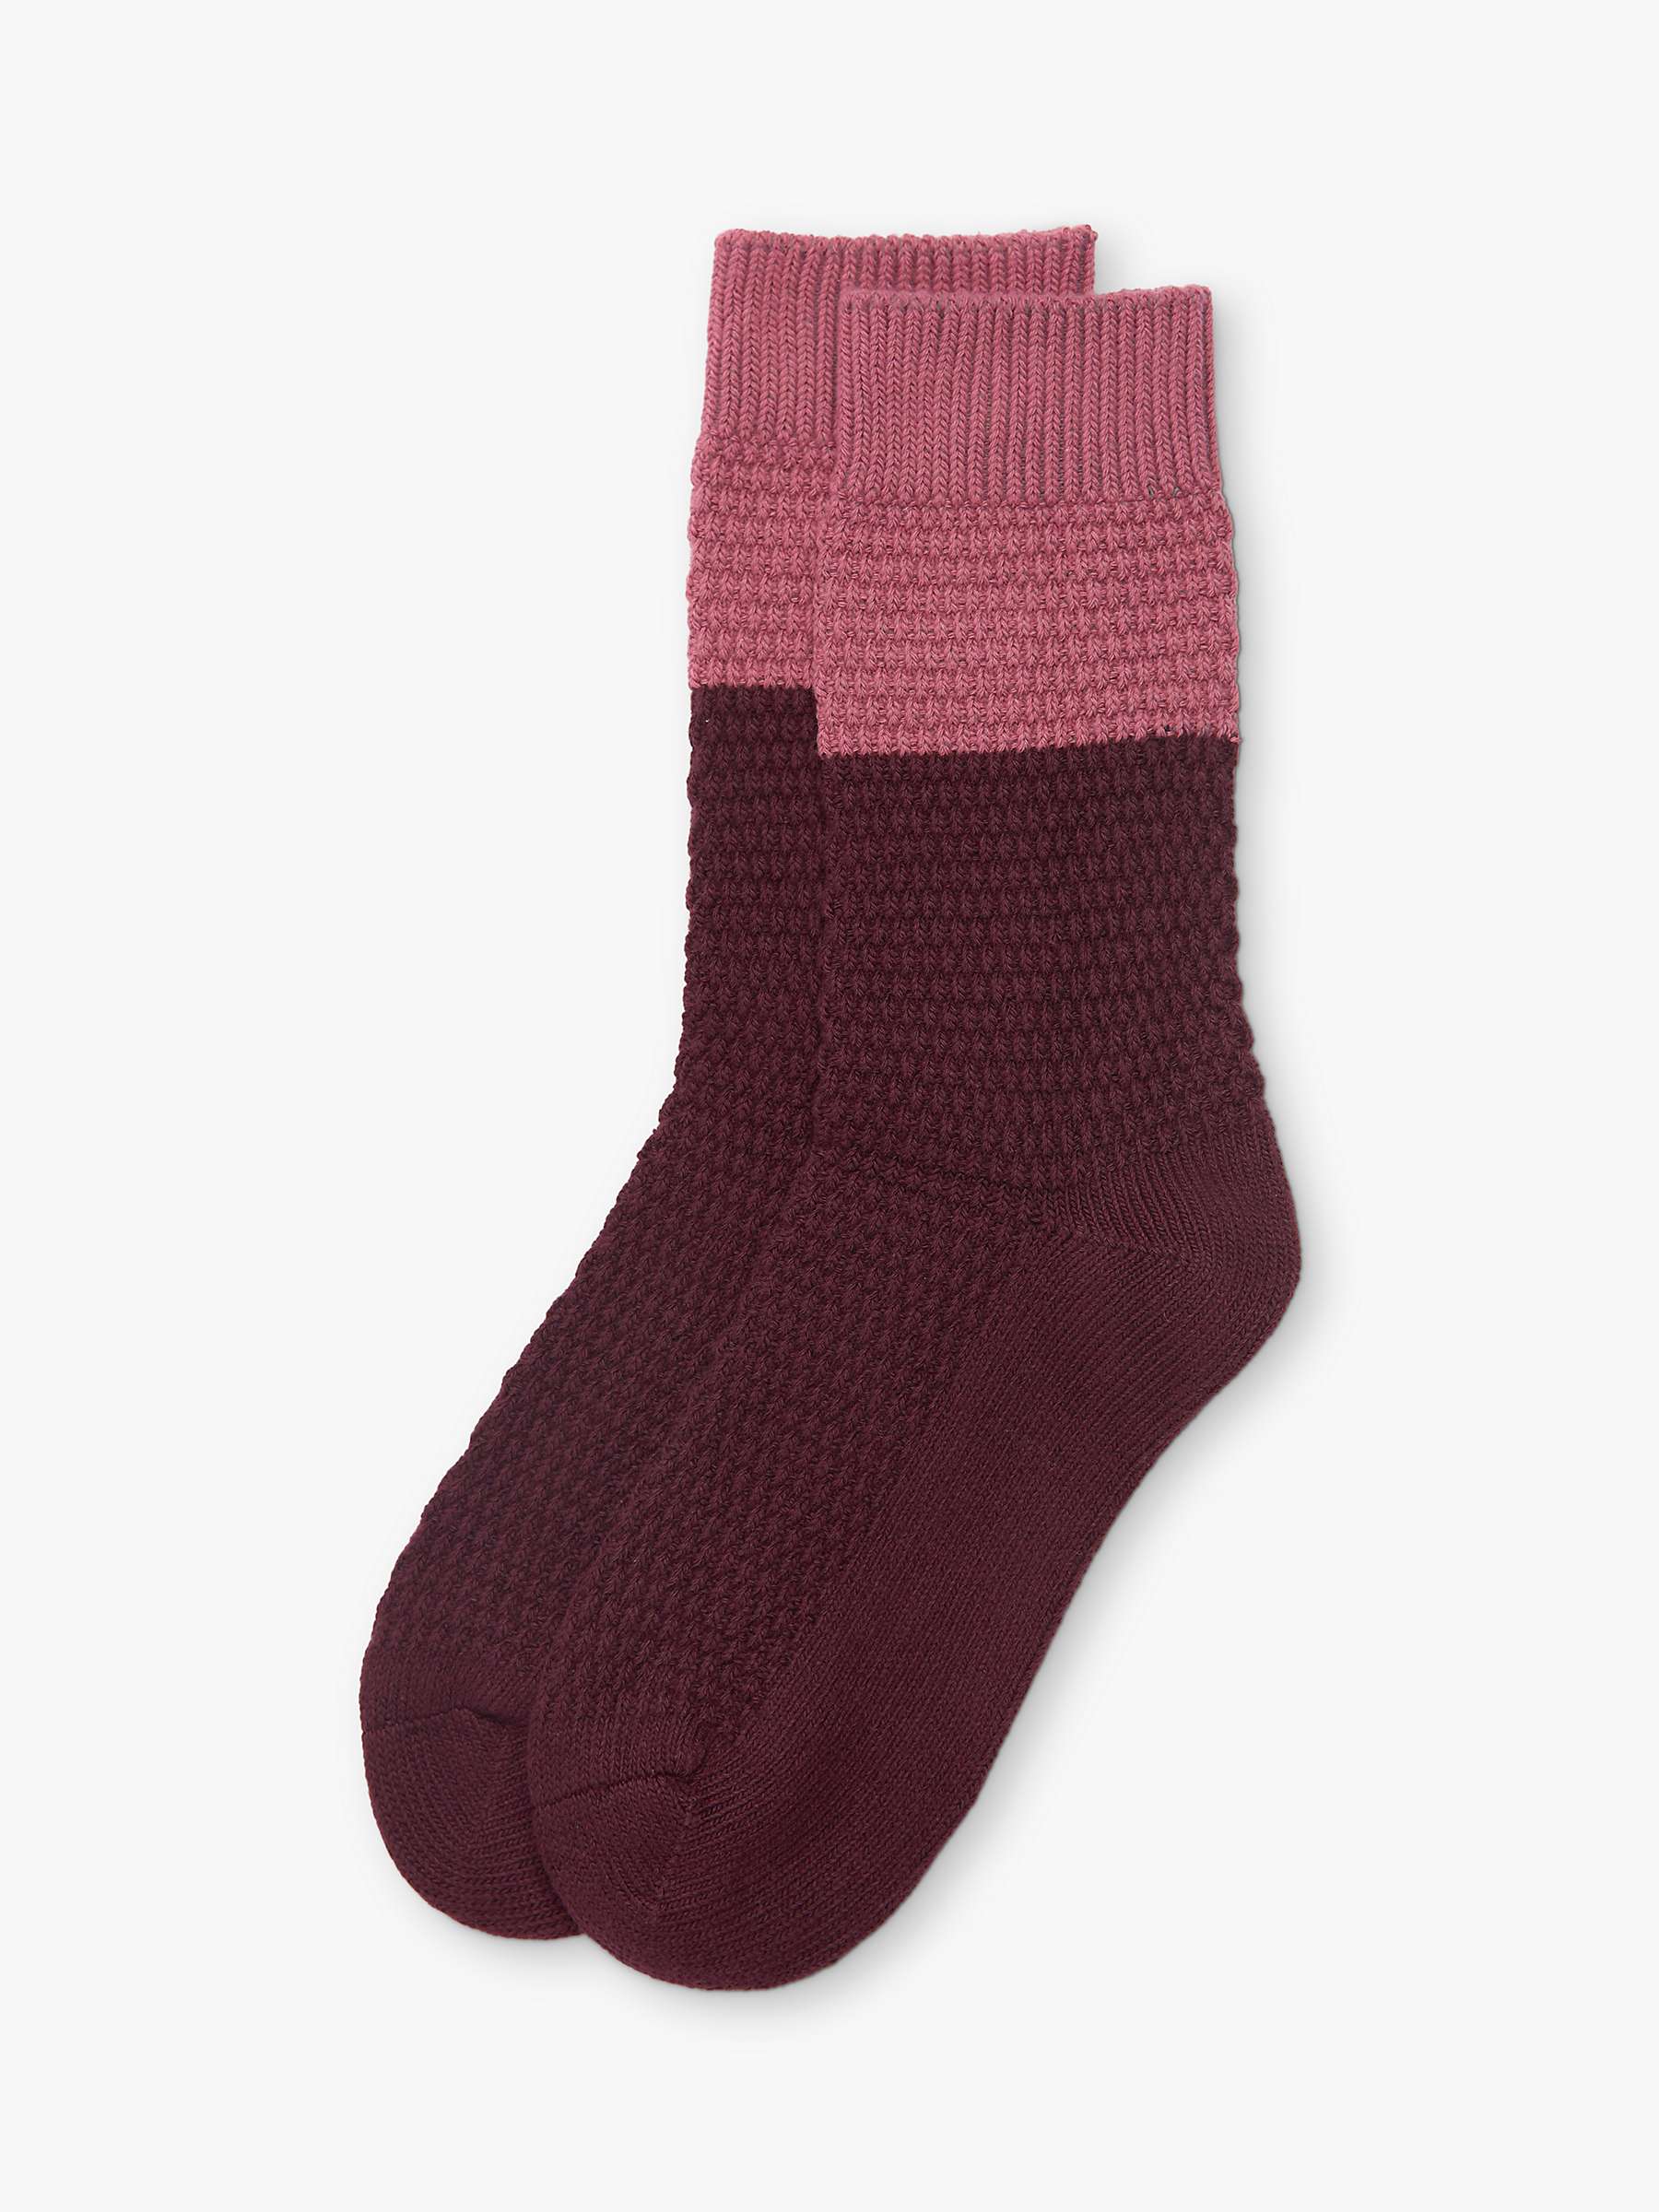 Buy Barbour Textured Colour Block Socks, Burgundy/Pink Online at johnlewis.com